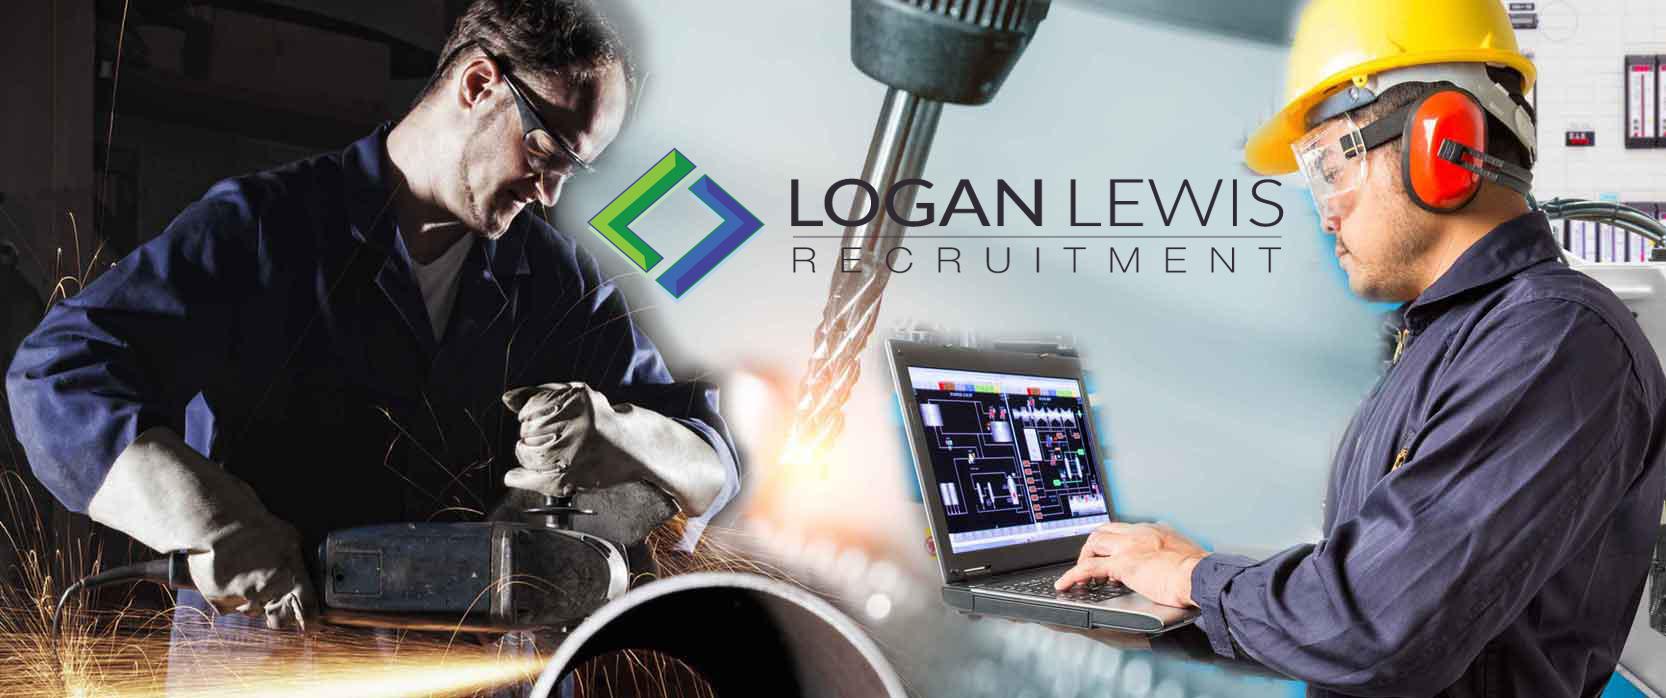 Logan Lewis Recruitment Ashington 01916 914333